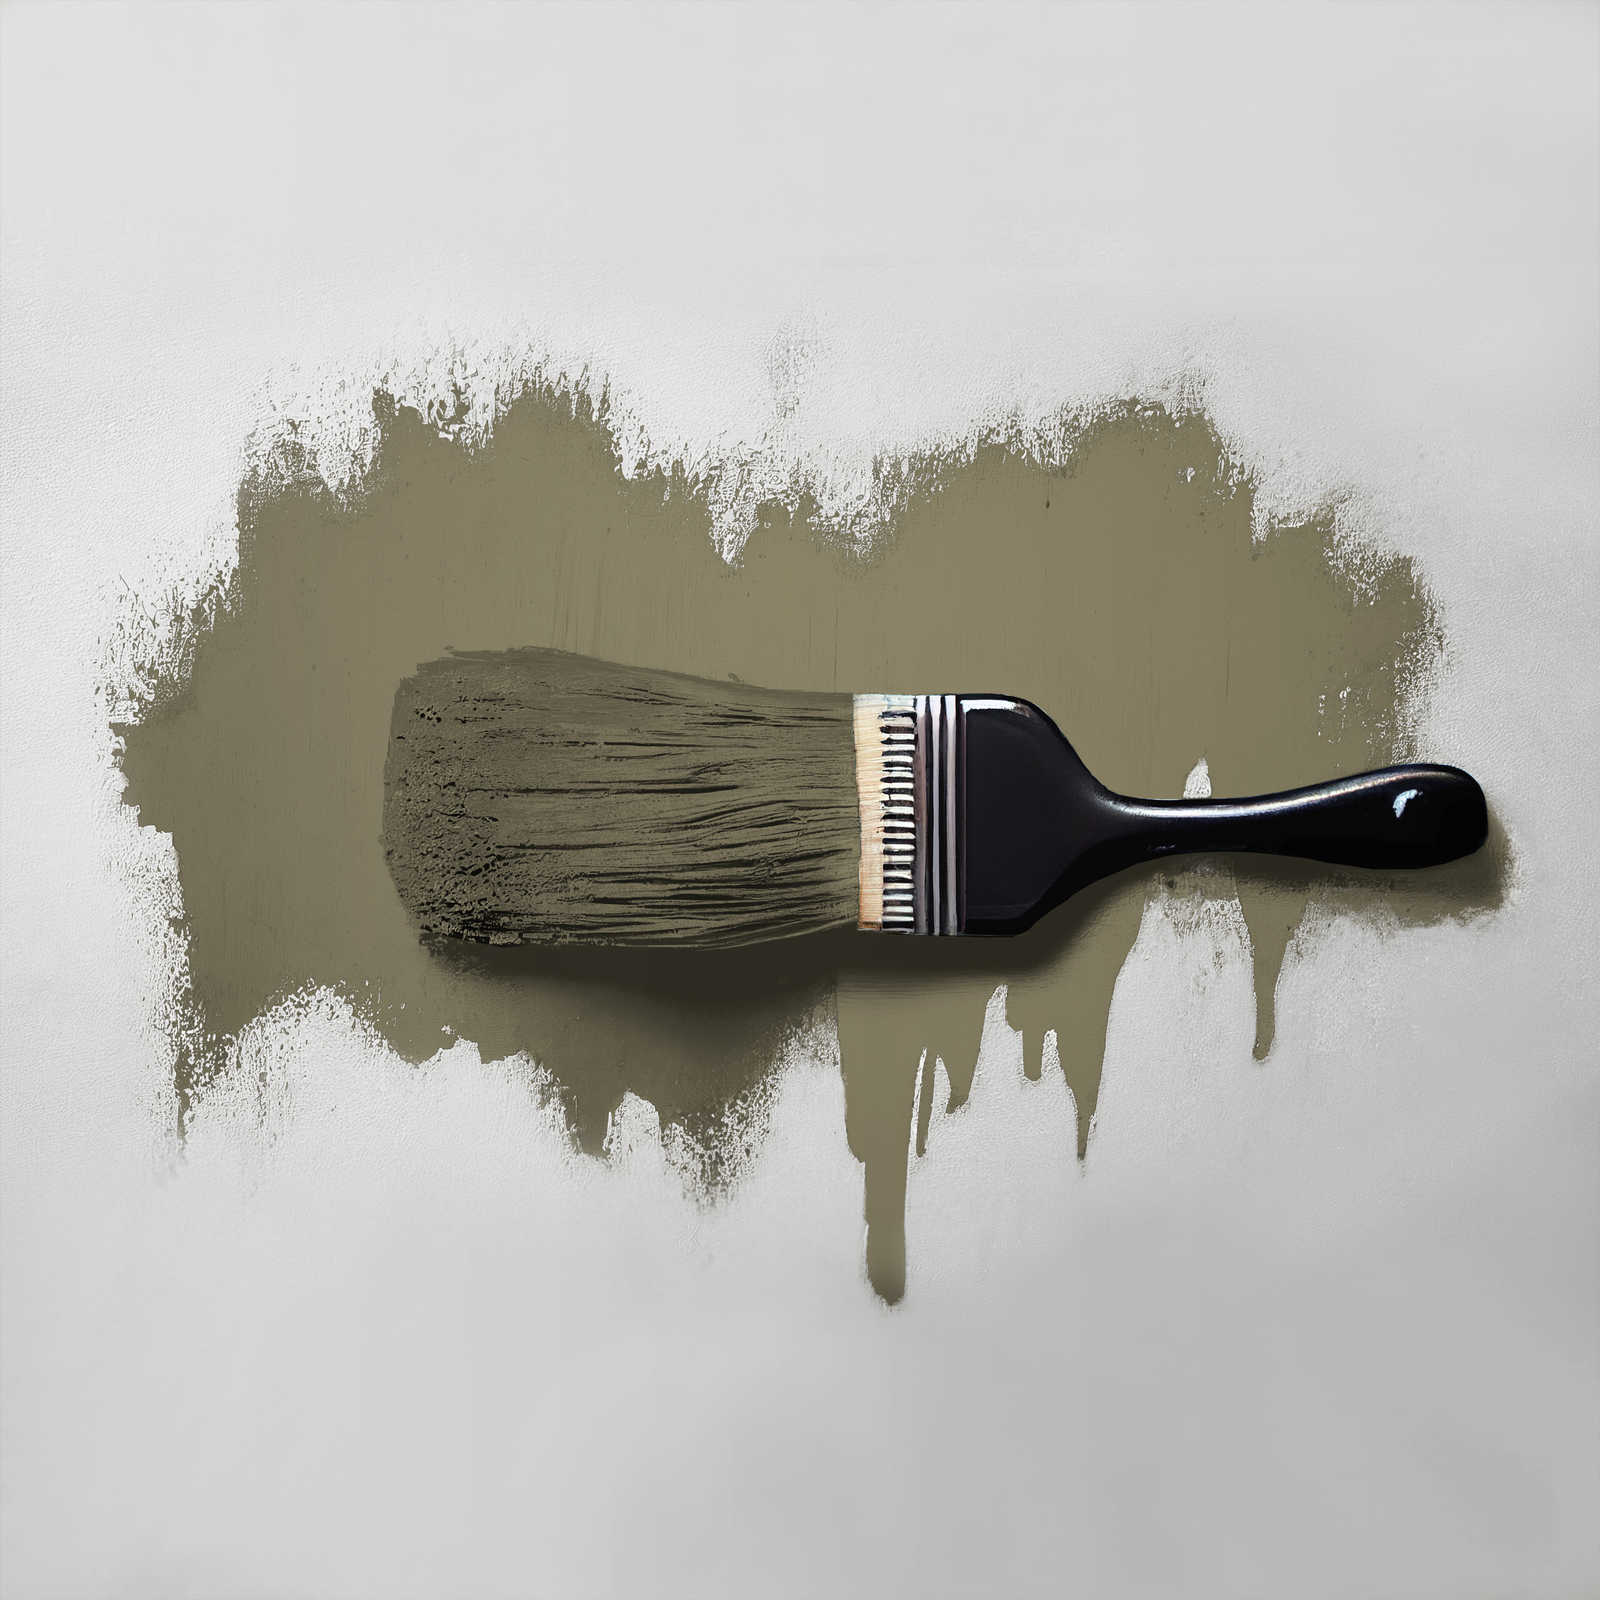             Pintura mural TCK4013 »Ordinary Olive« en tono oliva intenso – 2,5 litro
        